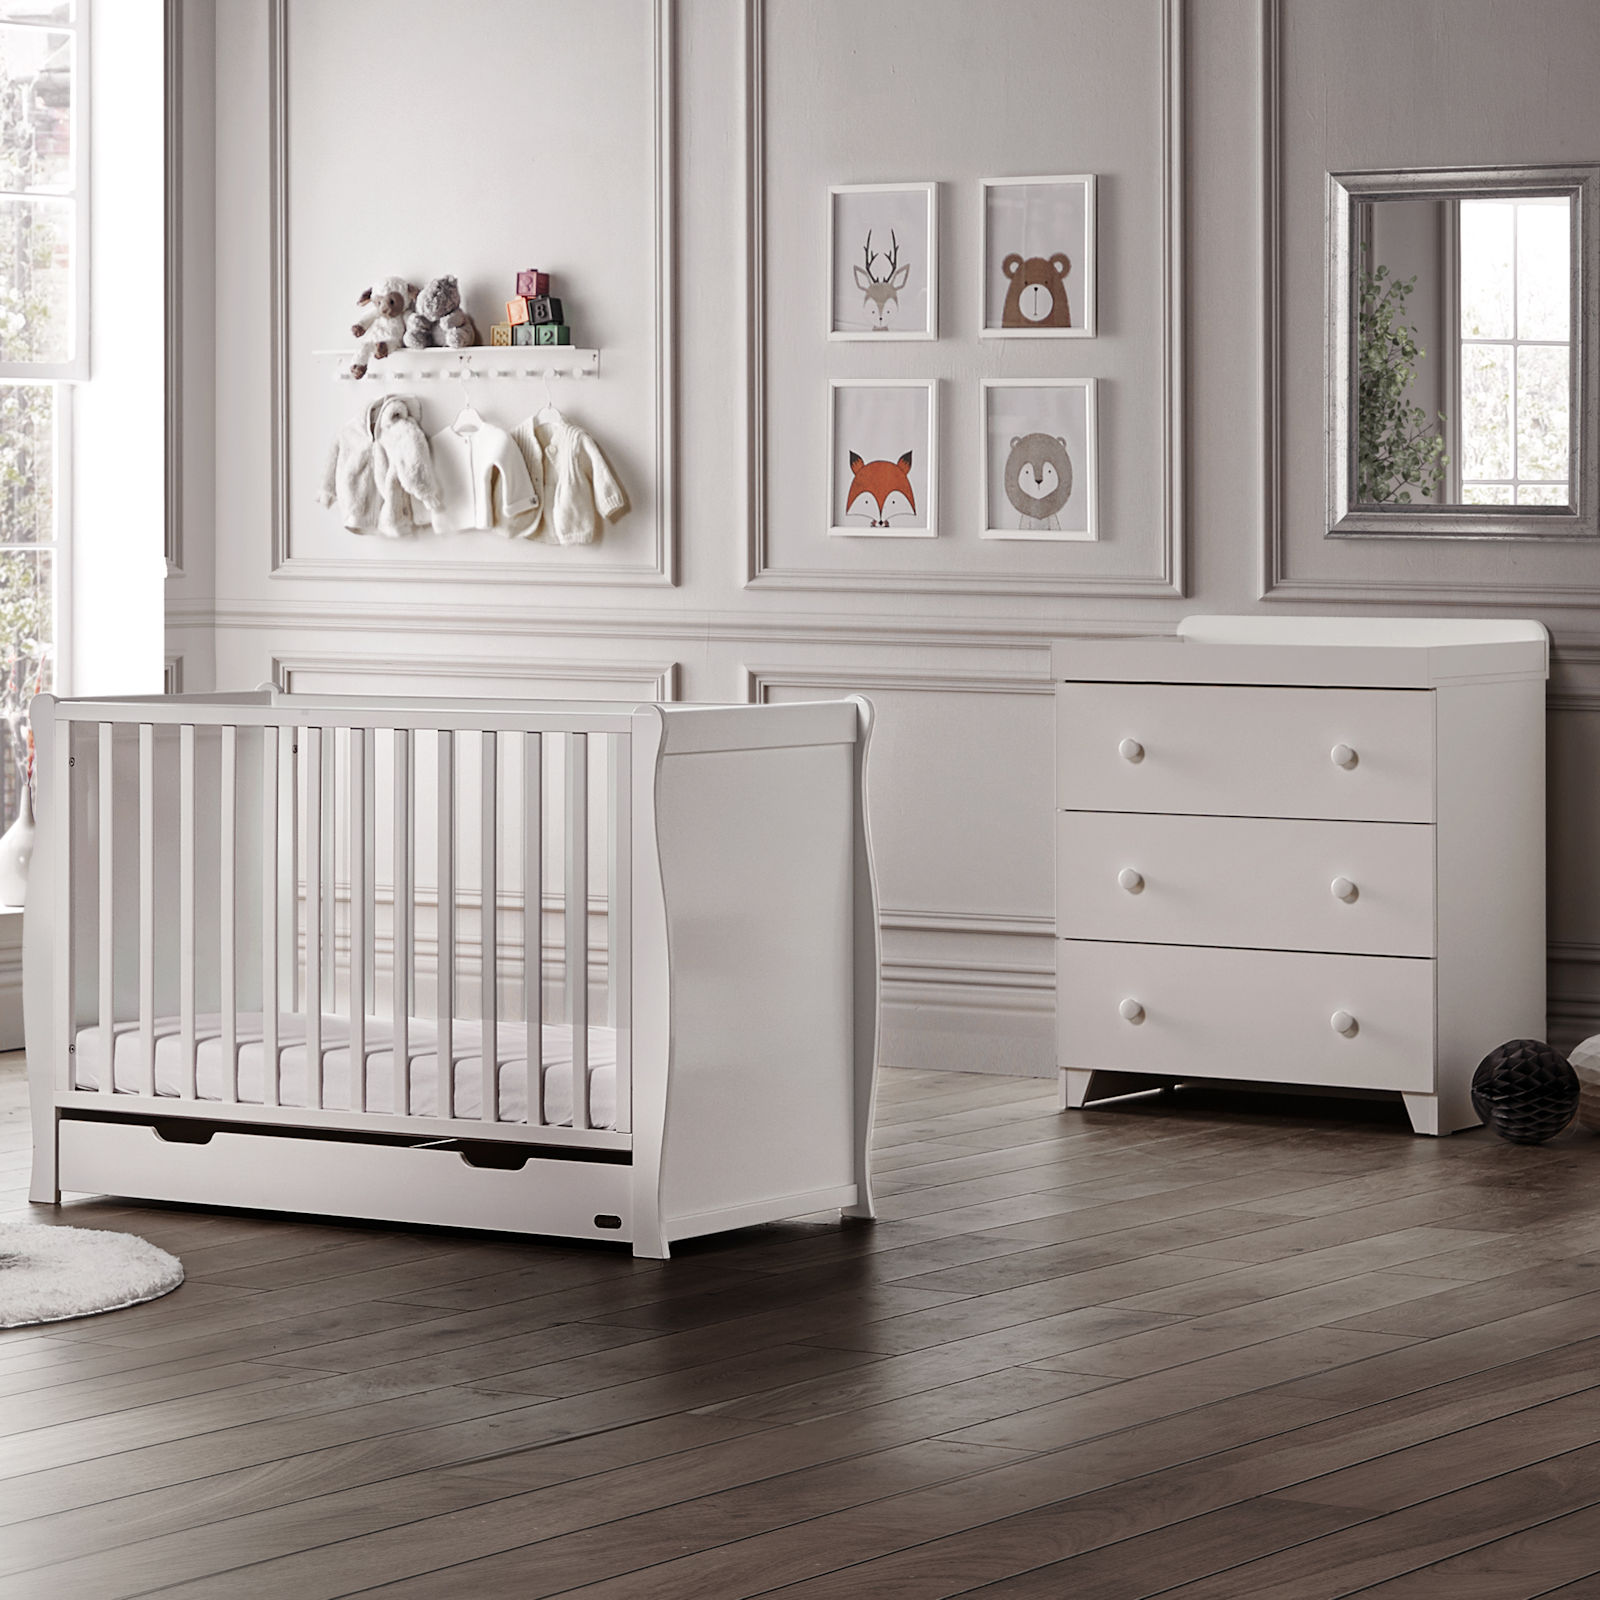 Puggle Sleigh Cot 5pc Nursery Furniture Set With Drawer & Maxi Air Cool Mattress - White